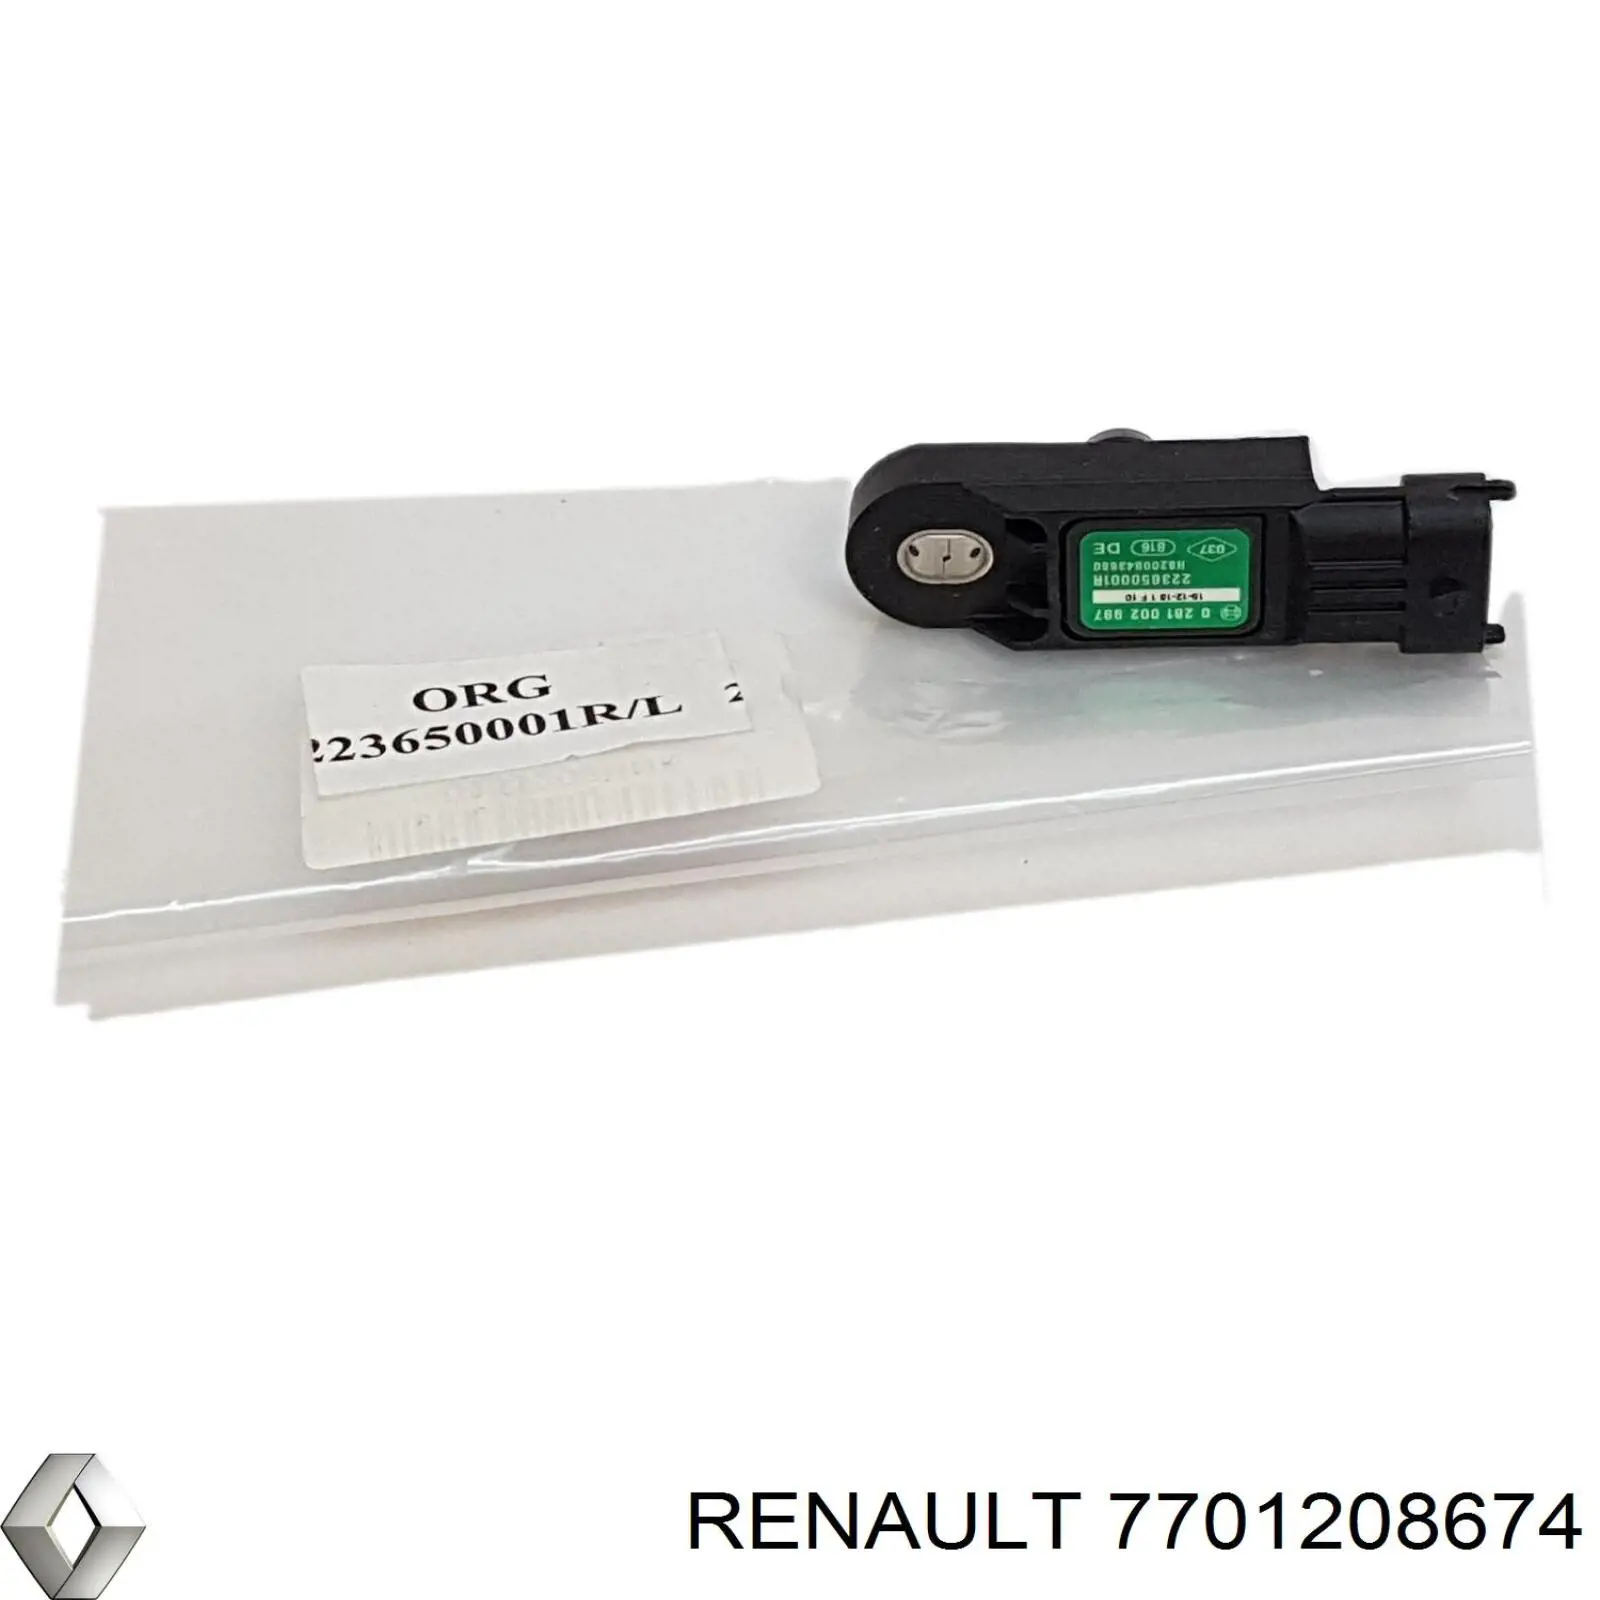 7701208674 Renault (RVI) sensor de presion de carga (inyeccion de aire turbina)